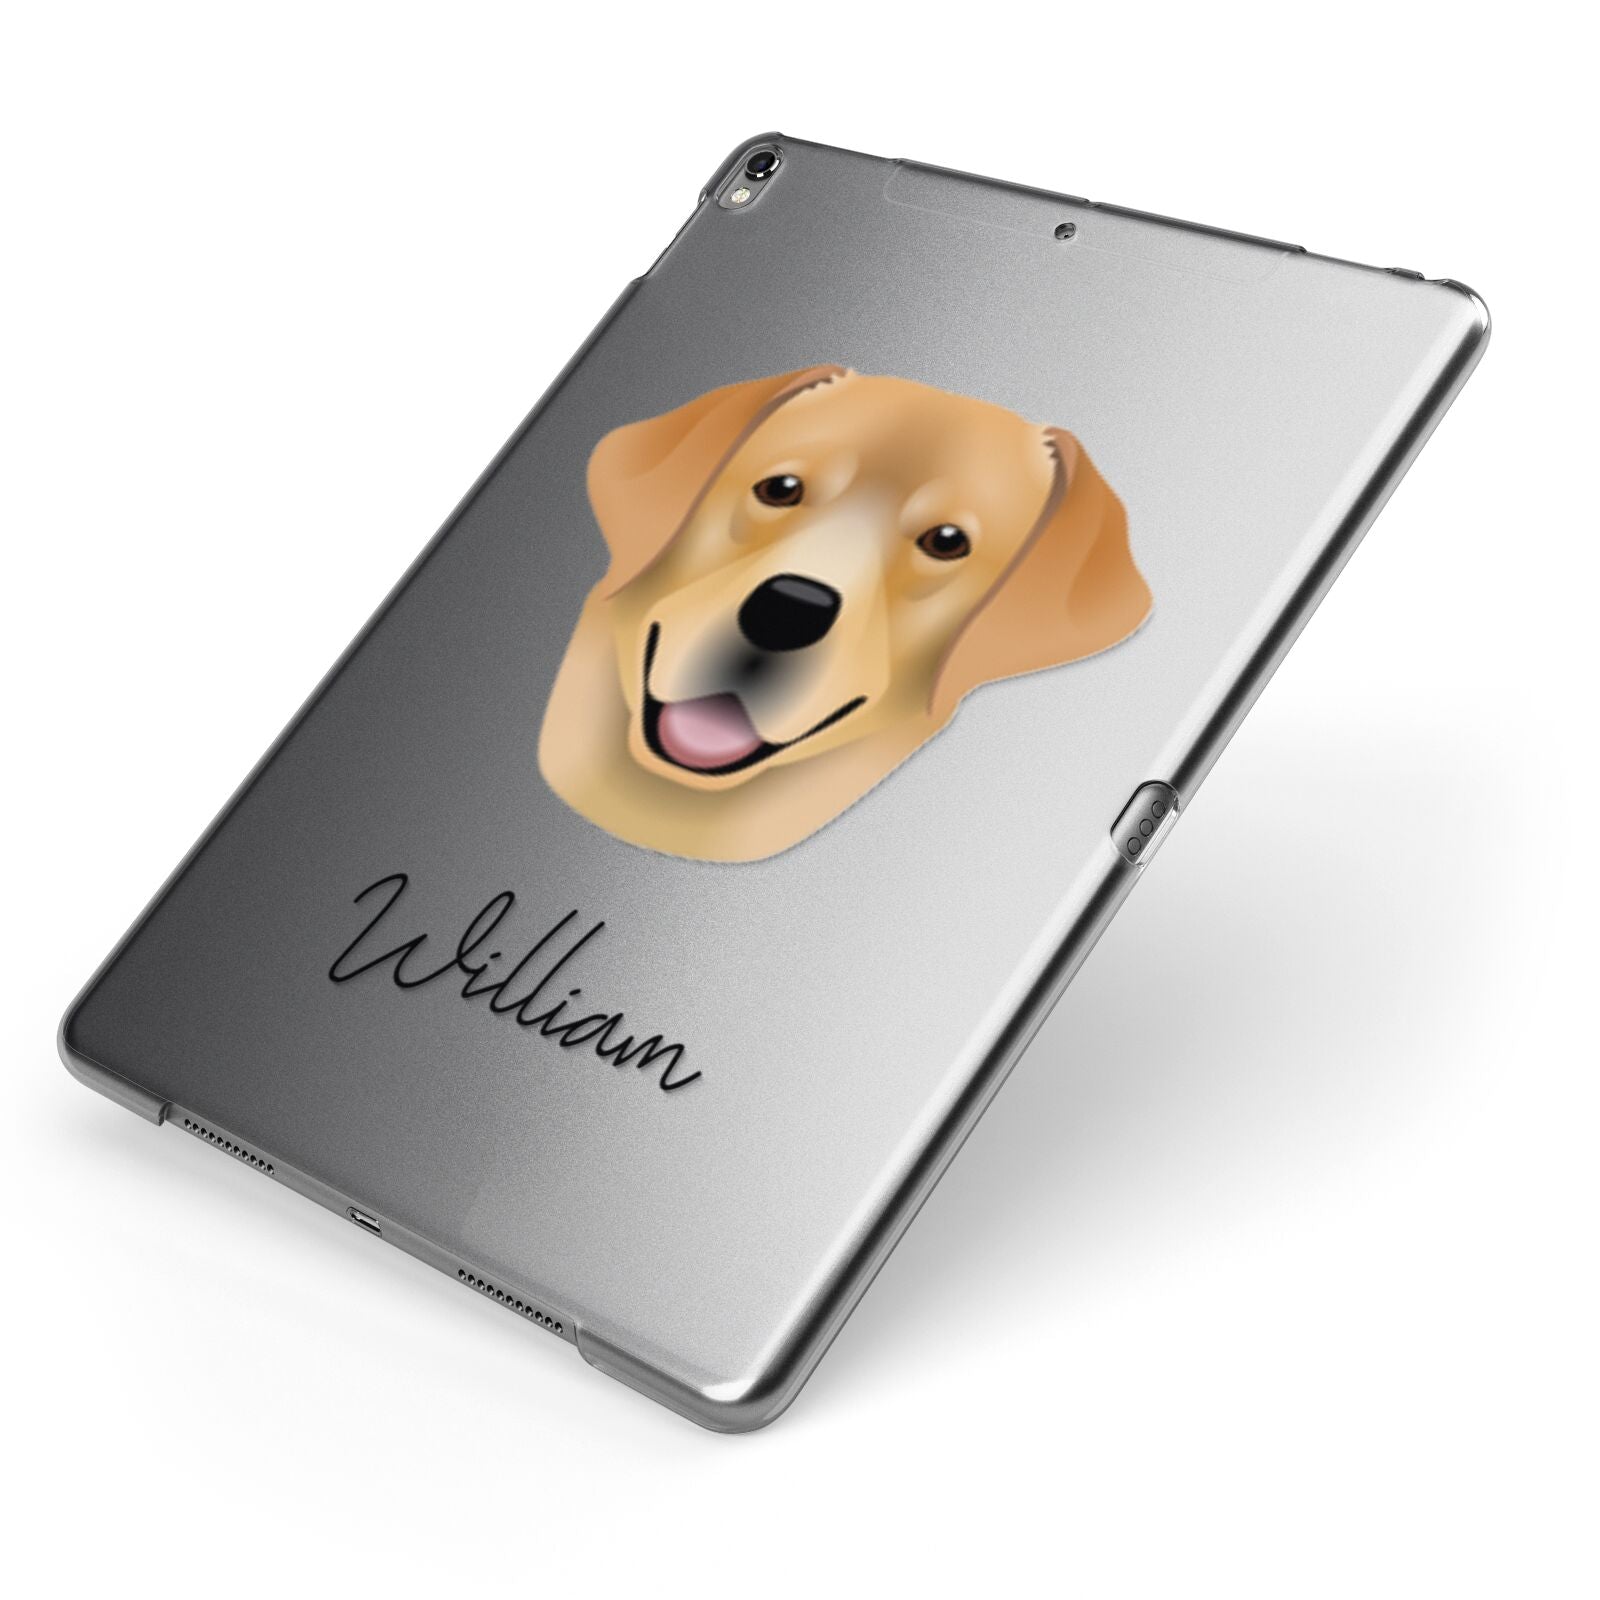 Labrador Retriever Personalised Apple iPad Case on Grey iPad Side View